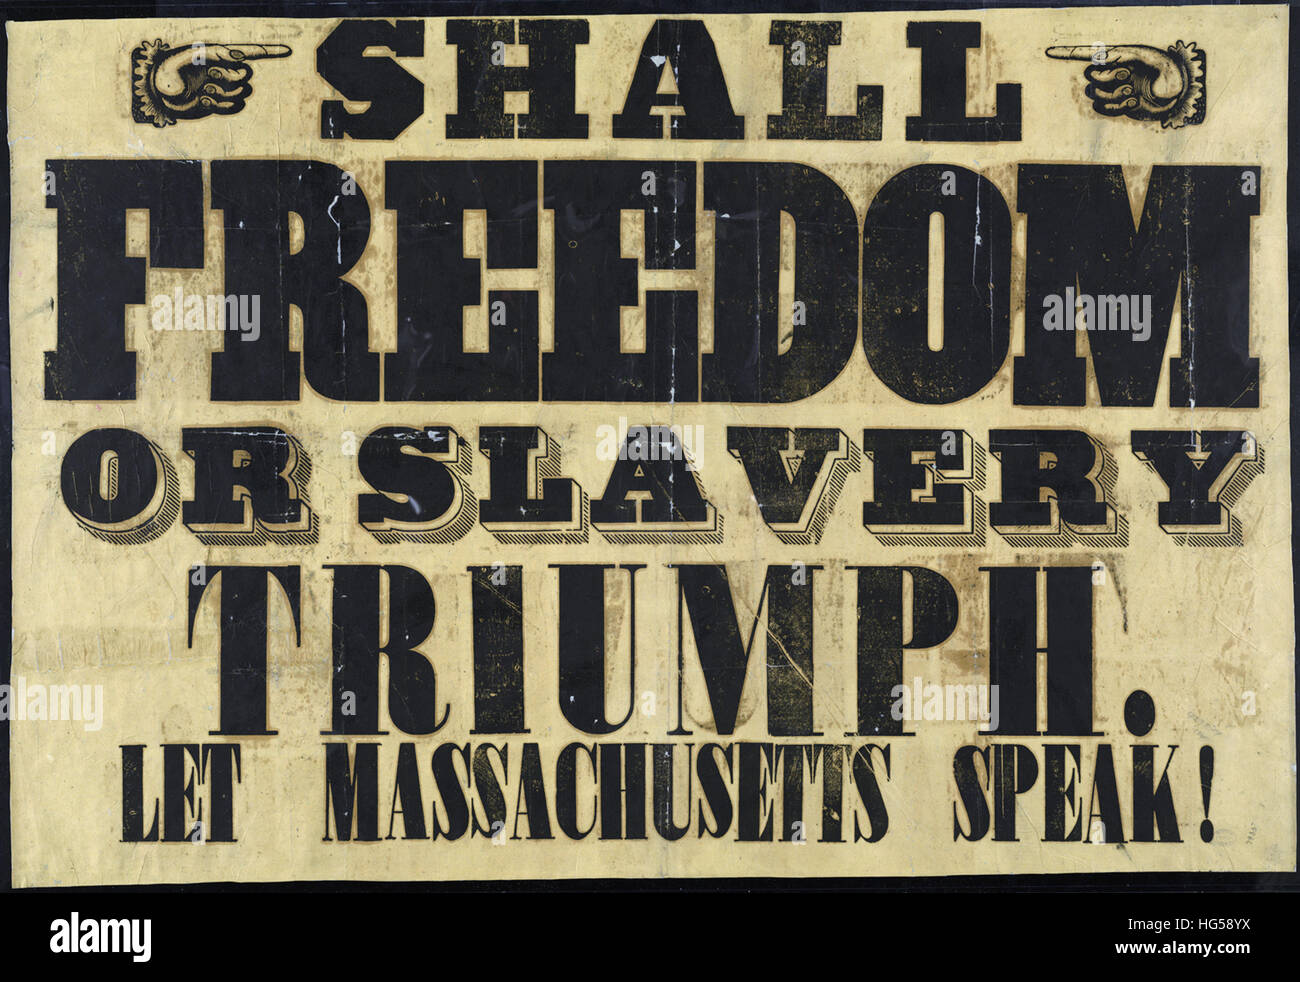 Anti-Slavery costados: Circa 1850 - será la libertad o la esclavitud triunfo Foto de stock